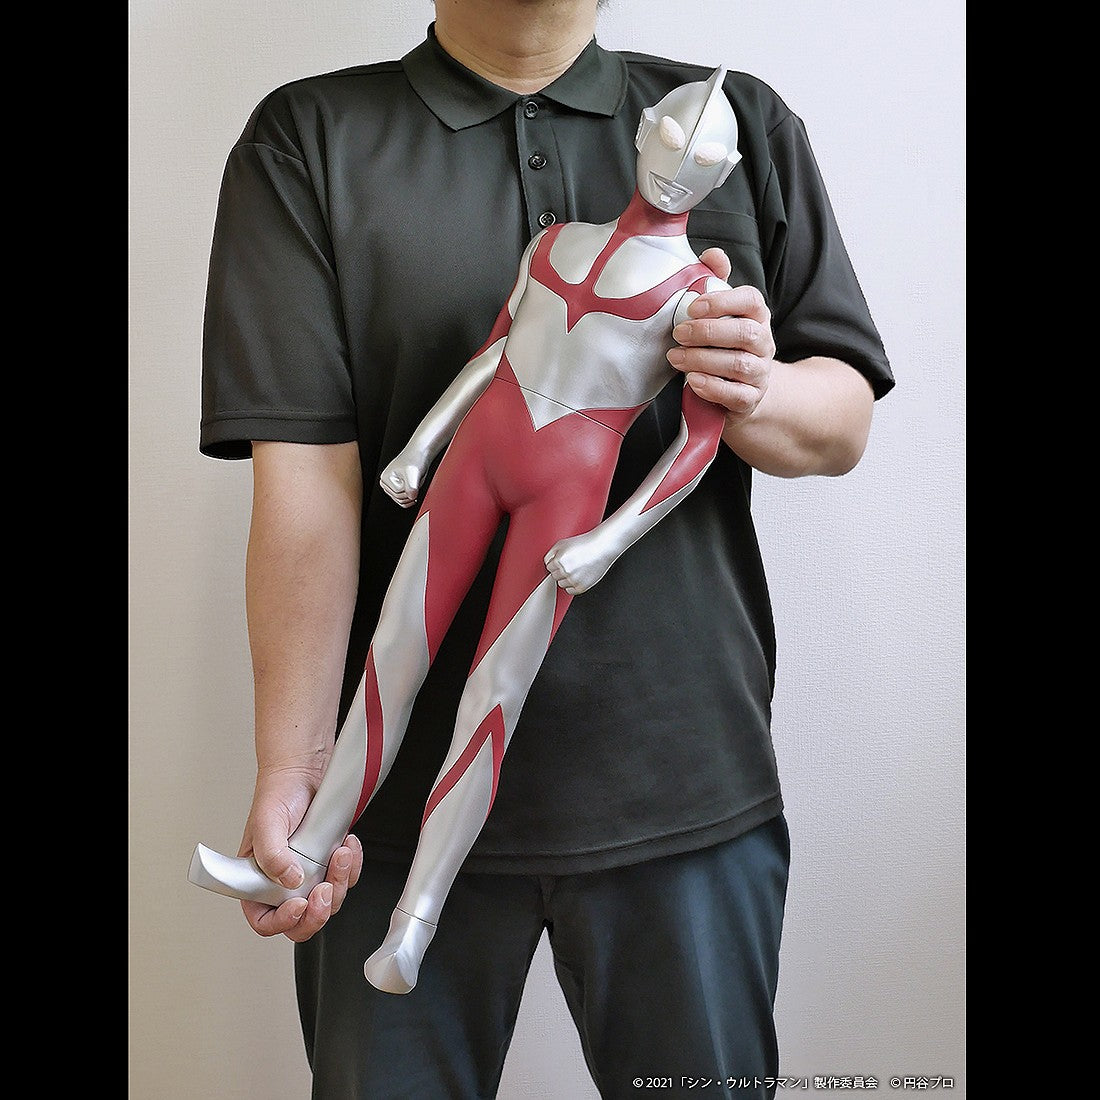 Plex Shin Ultraman Jumbo 23" Tall Vinyl Figure